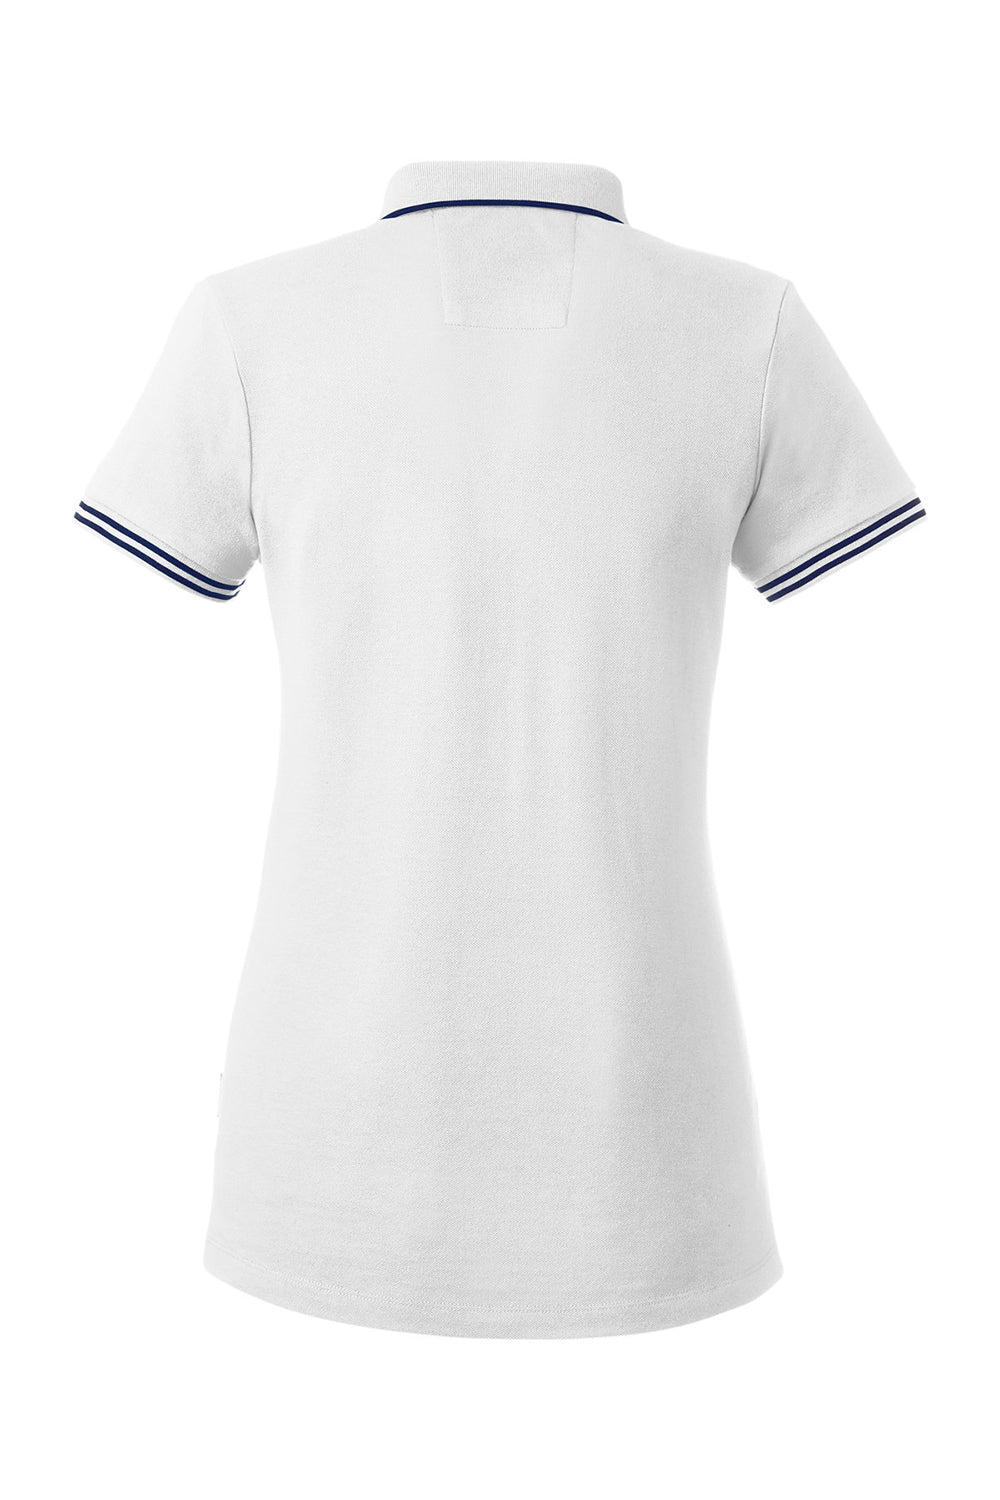 Nautica N17168 Womens Desk Short Sleeve Polo Shirt White/Navy Blue Flat Back